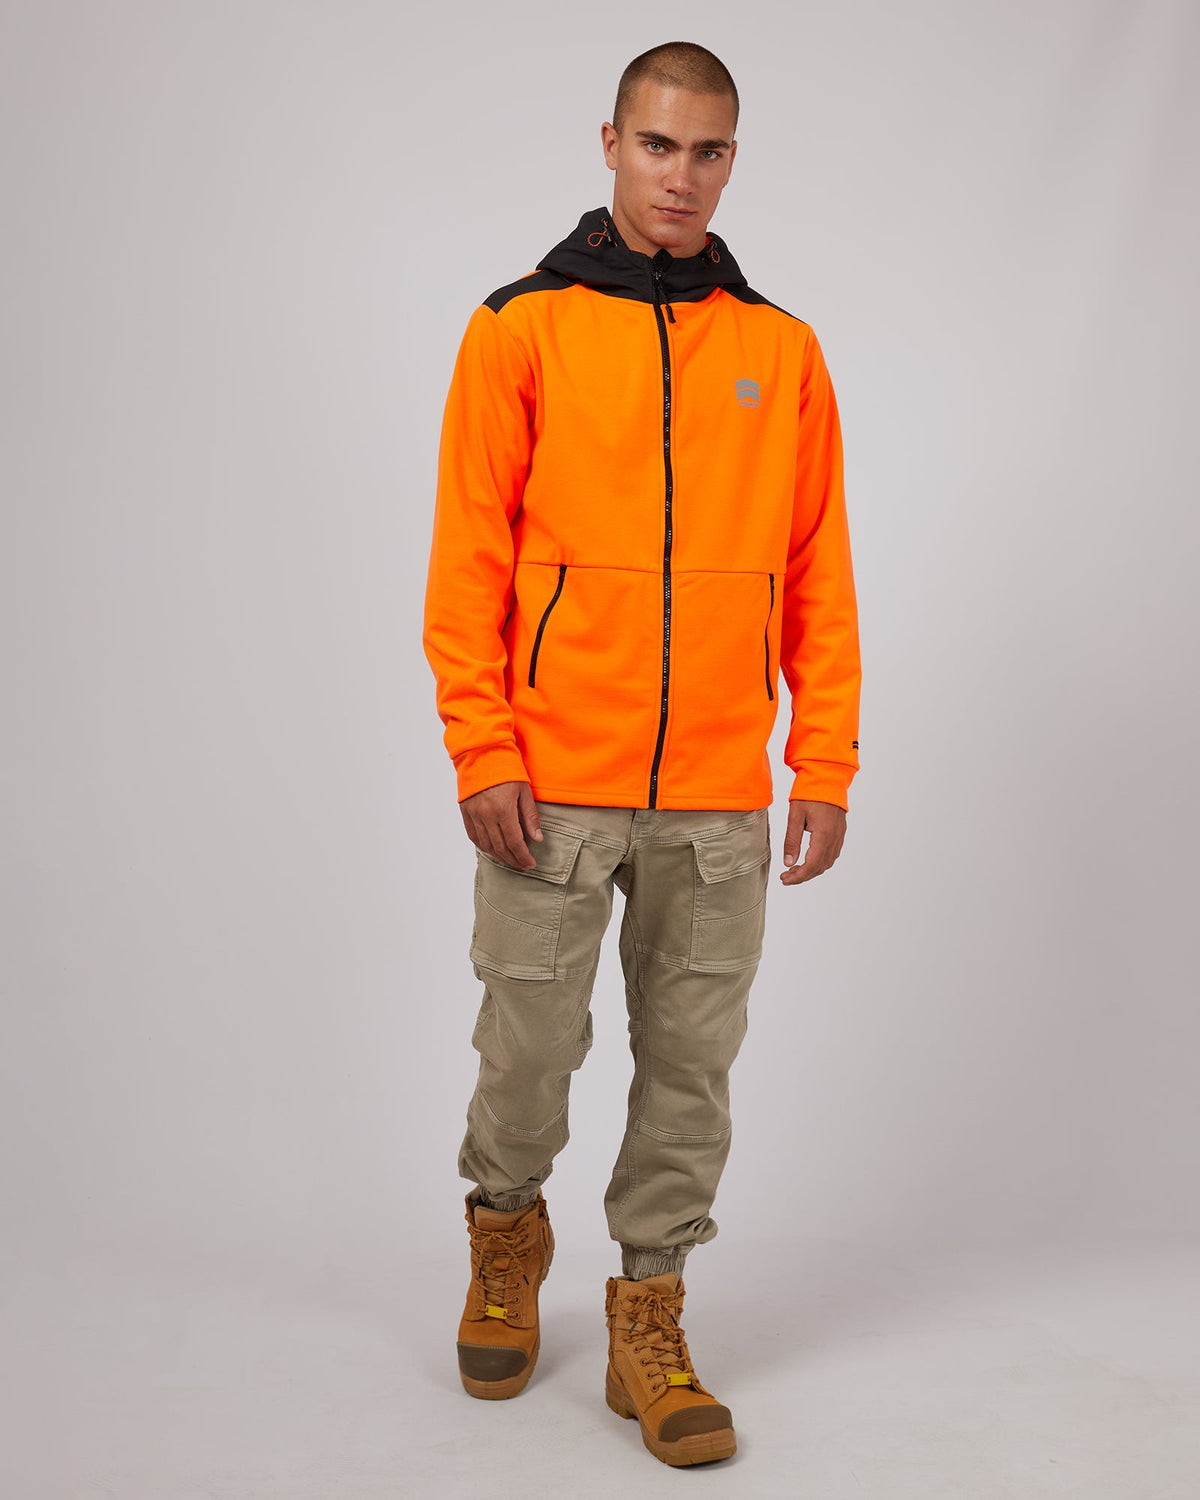 St. Goliath-Apw Zip Hooded Fleece Orange-Edge Clothing